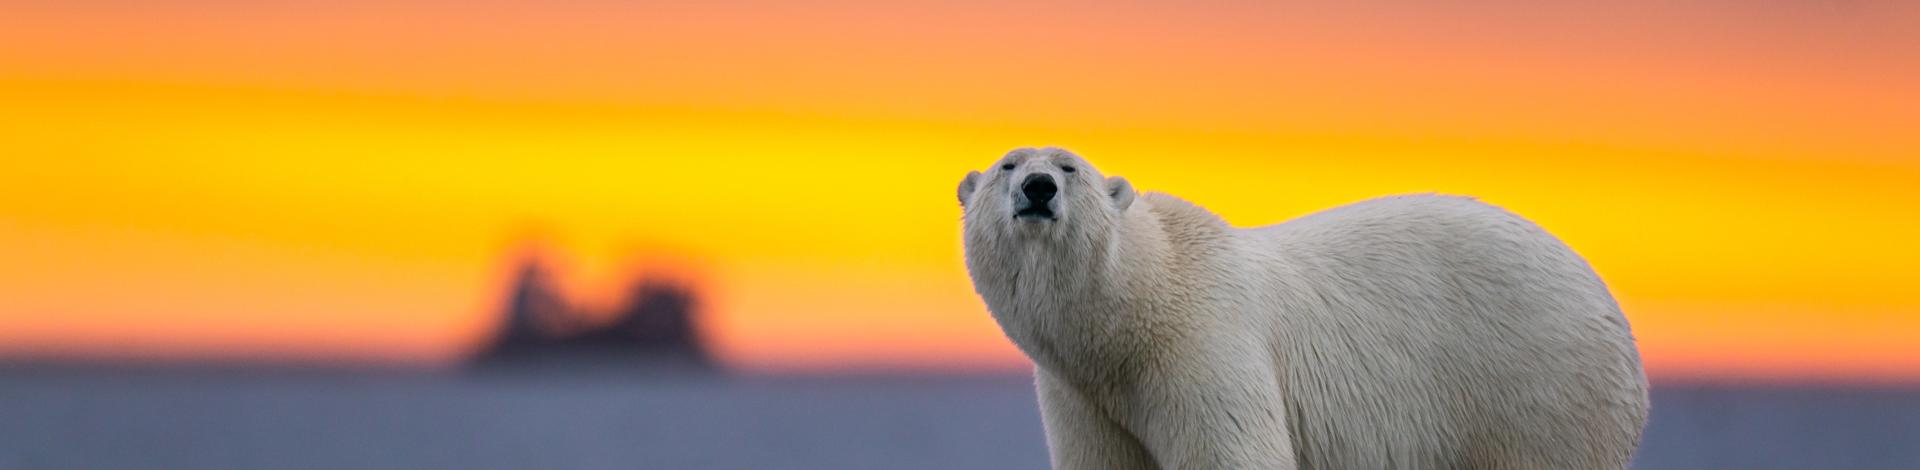 Polar bear standing on ice 